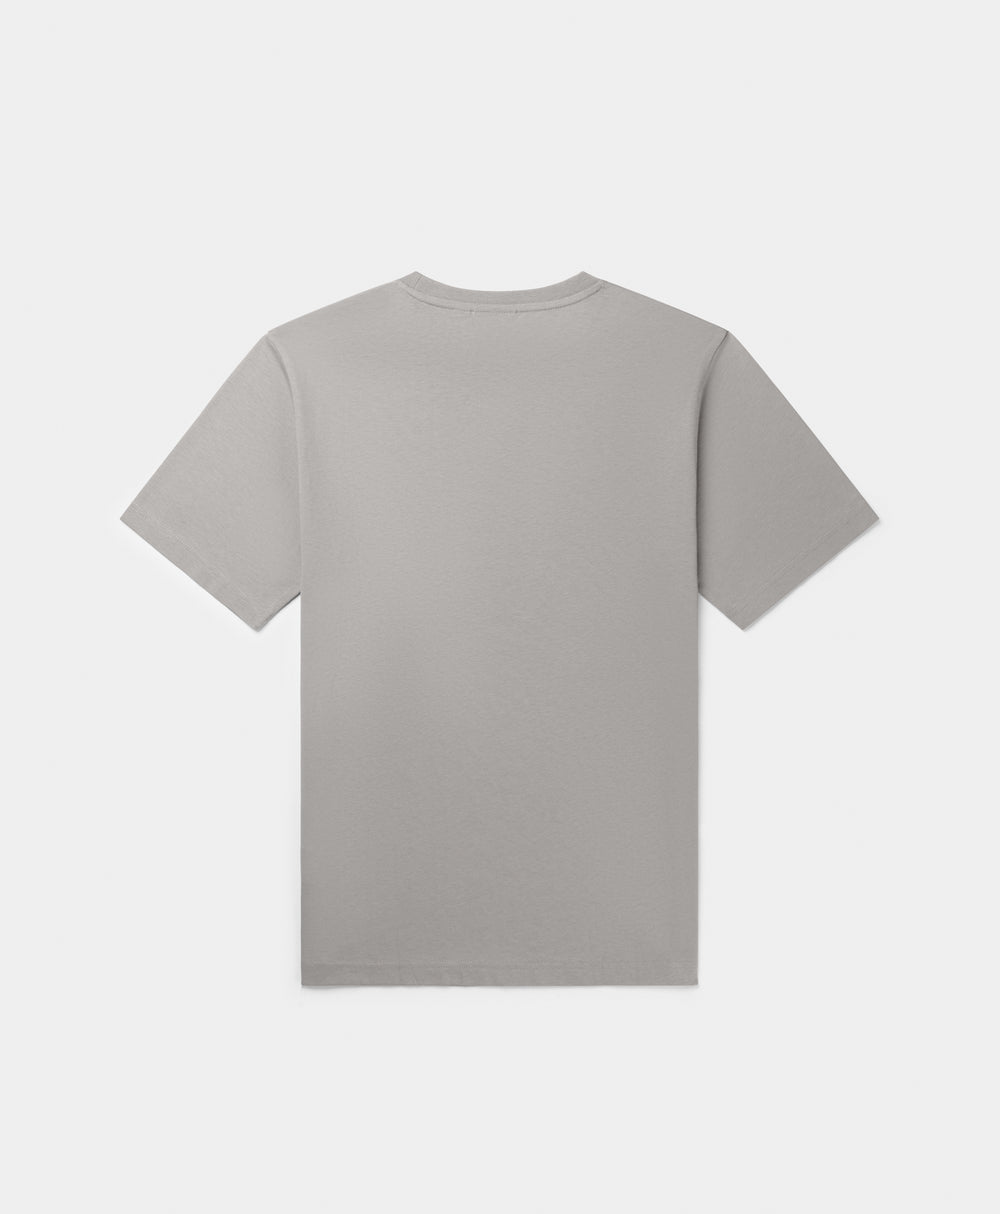 DP - Sleet Grey Place Of Origin T-Shirt - Packshot - Rear